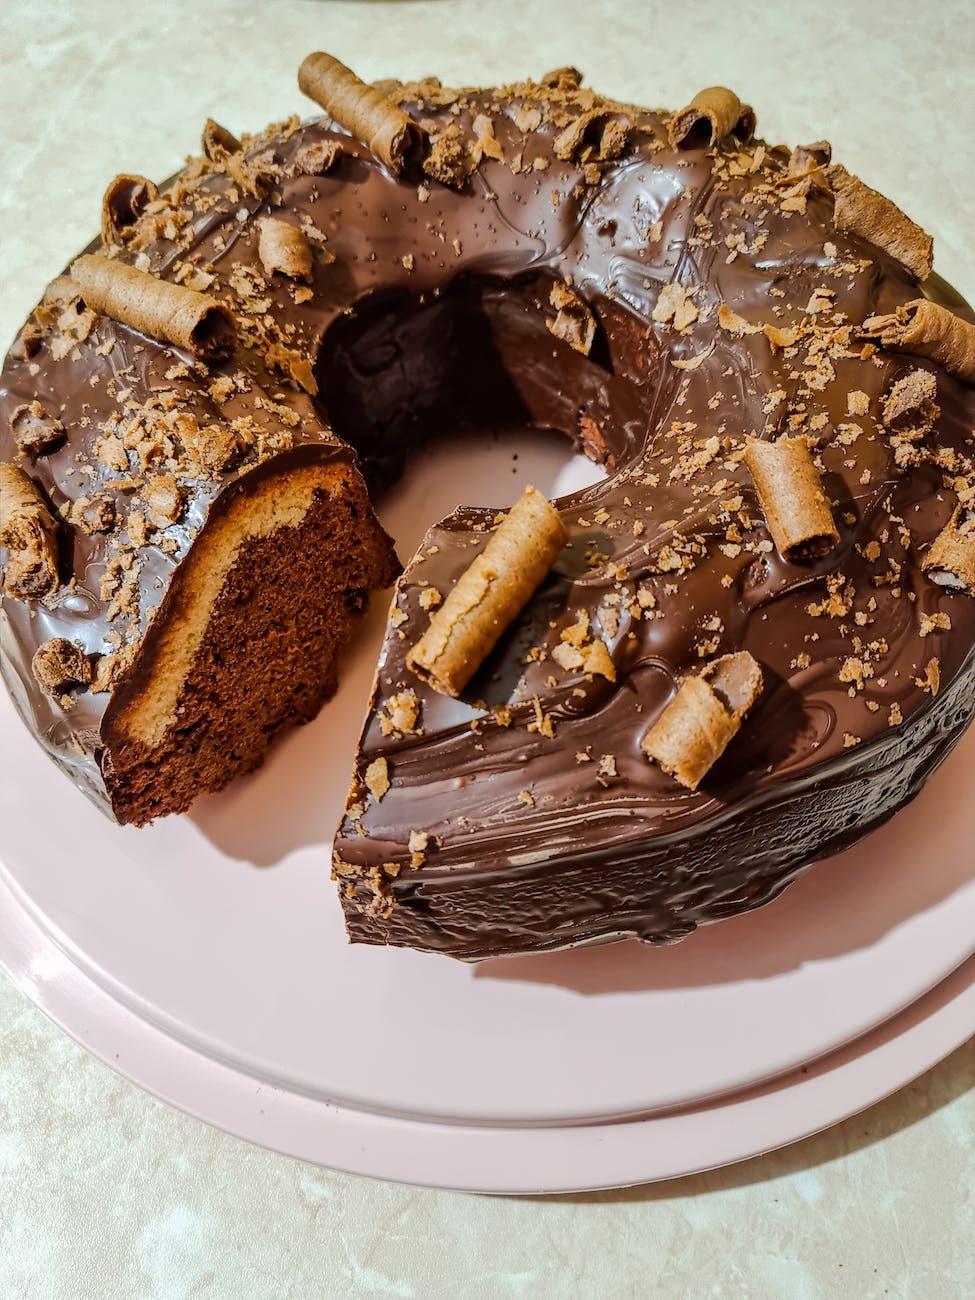 Chocolate cake on a ceramic plate